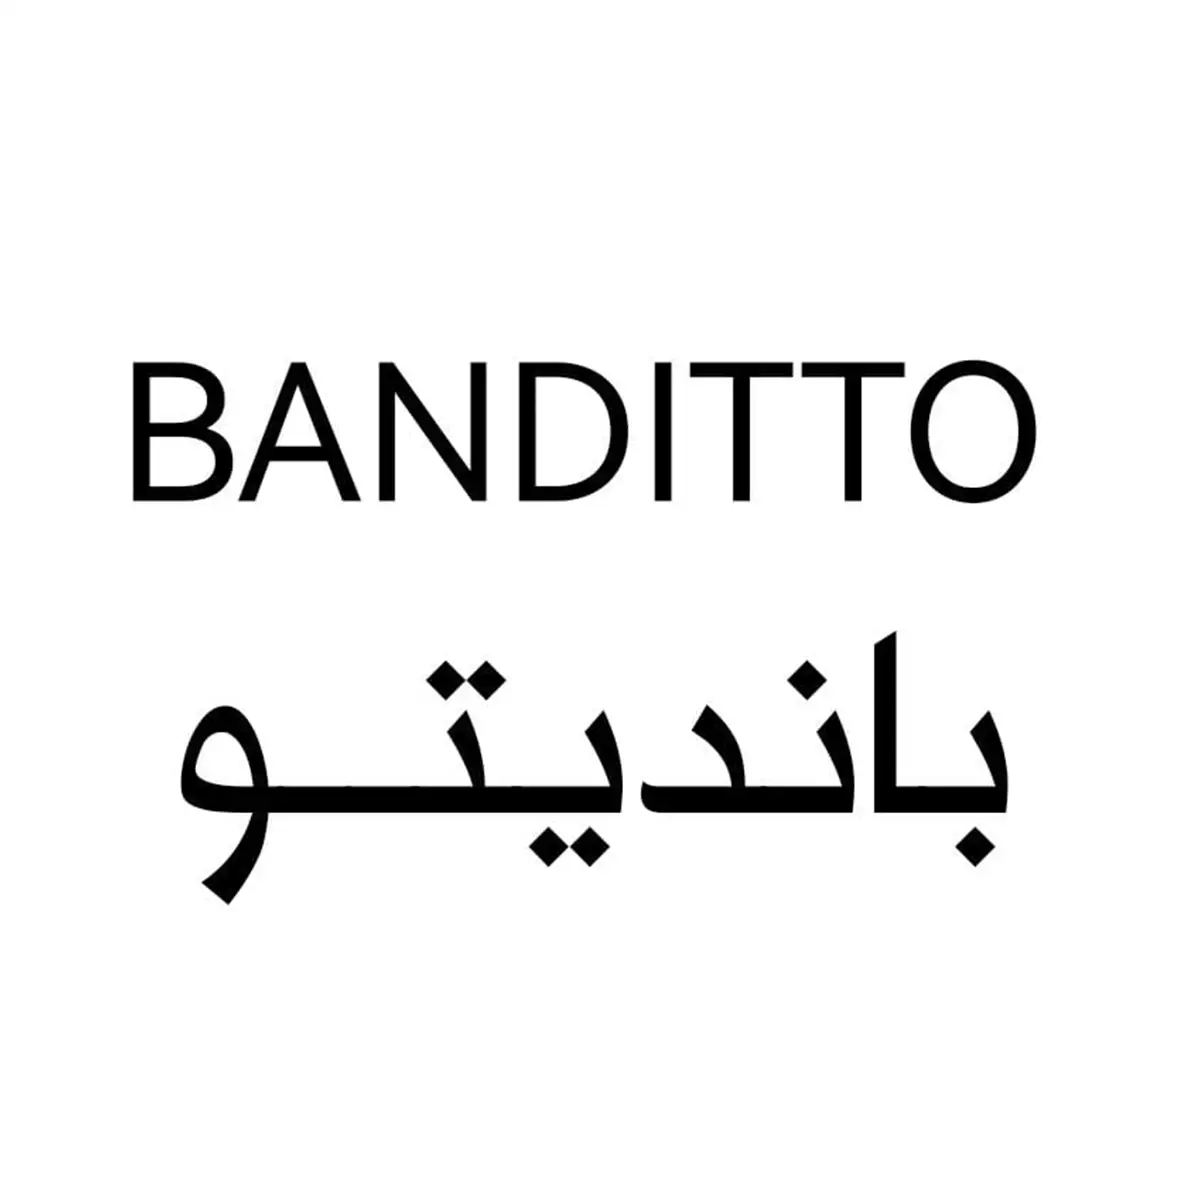 Banditto logo